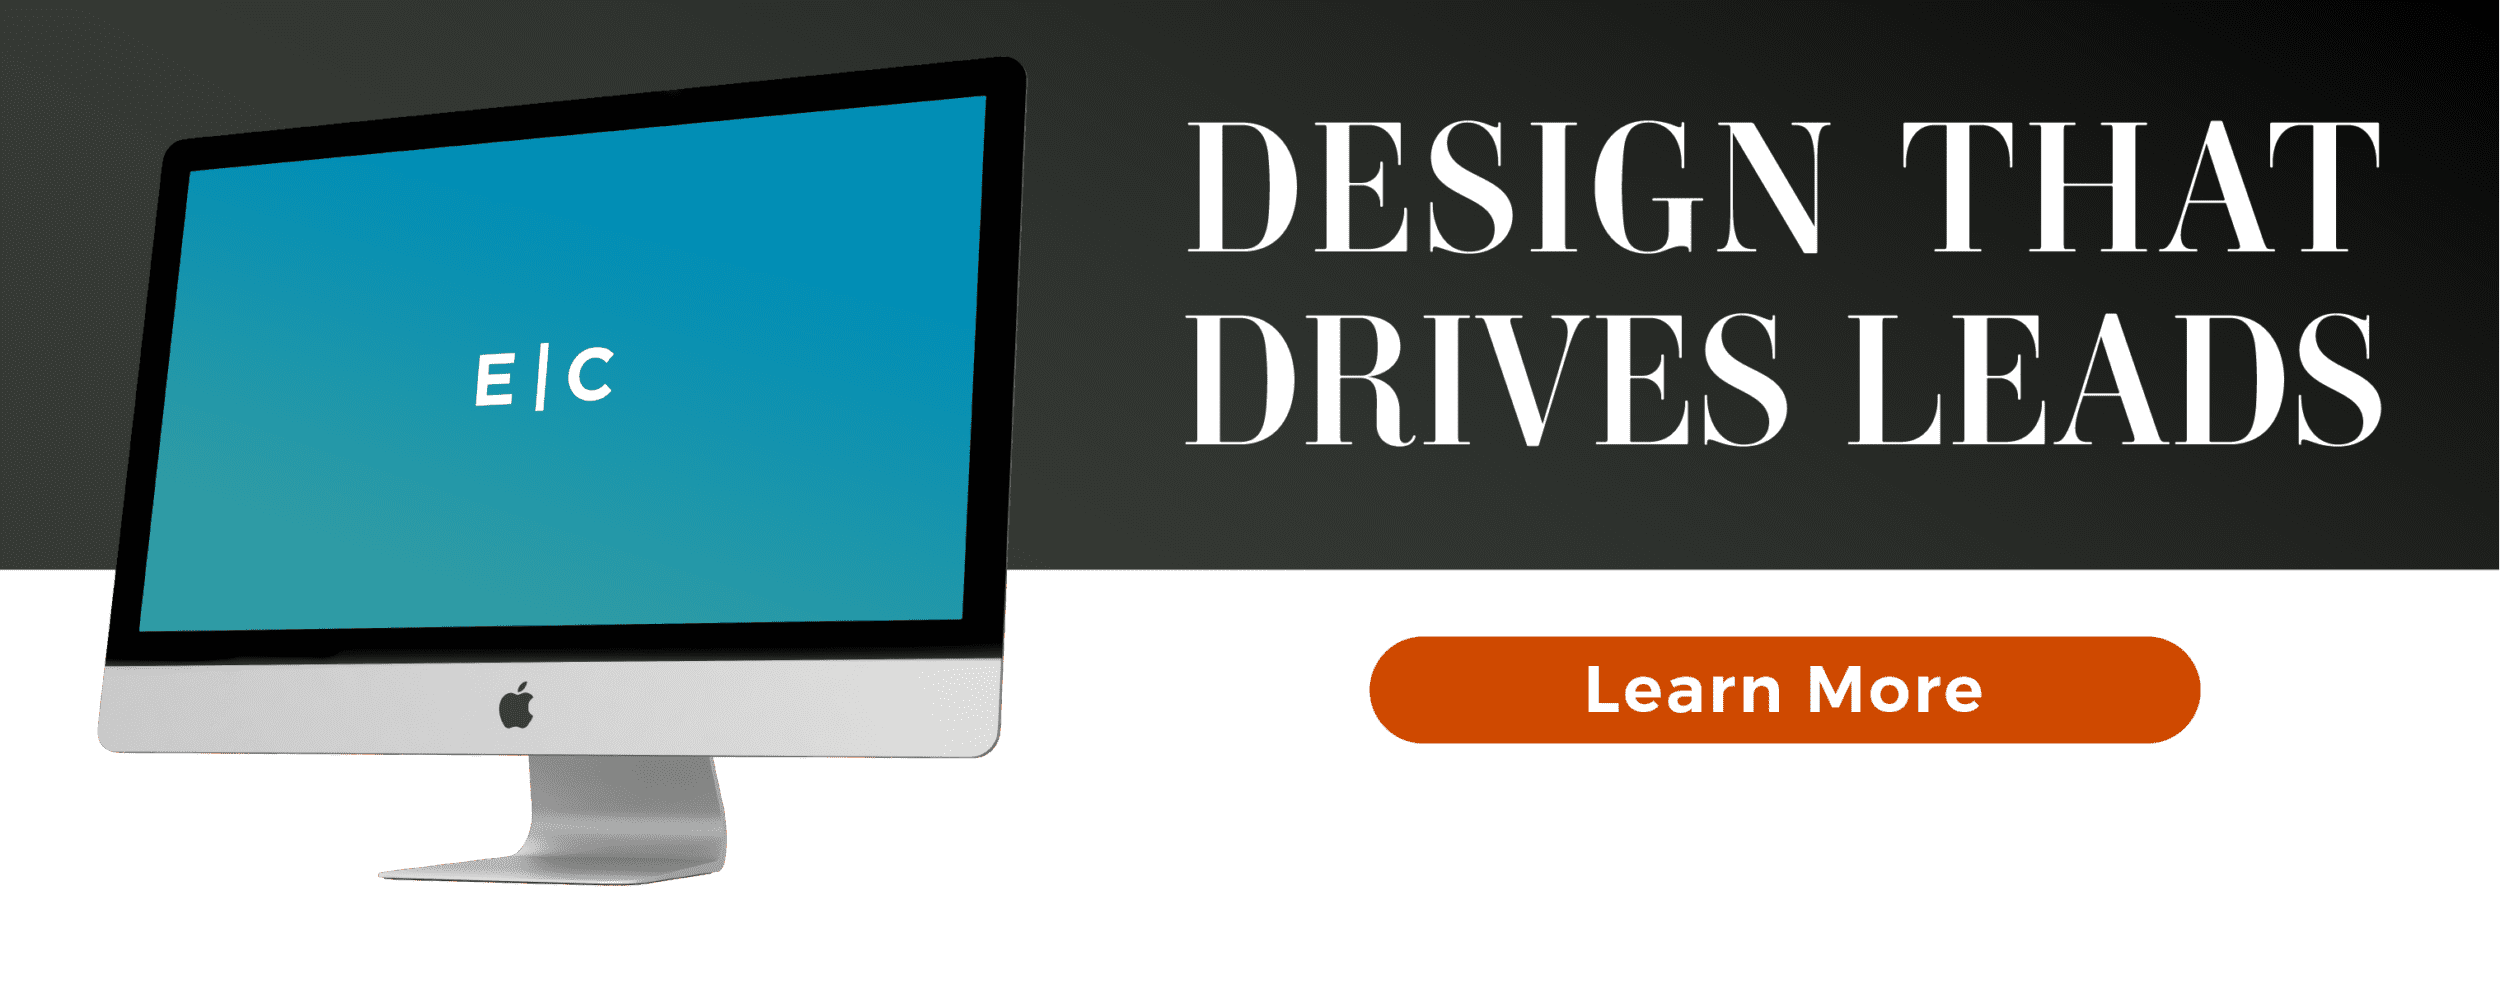 Design that drive leads cta 